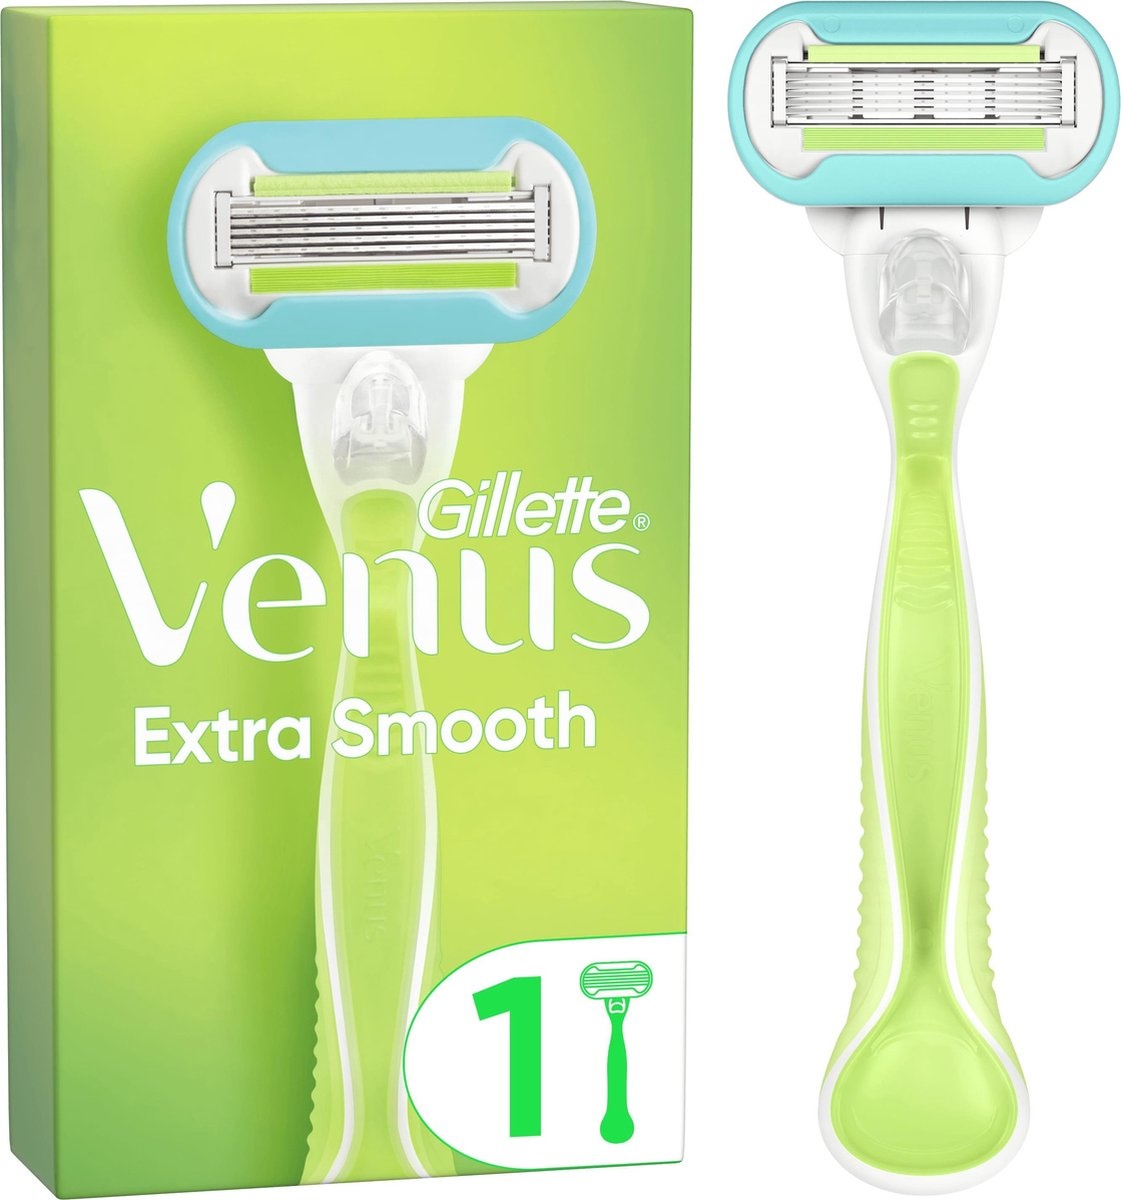 Gillette Venus Extra Smooth Women's Razor - Razor